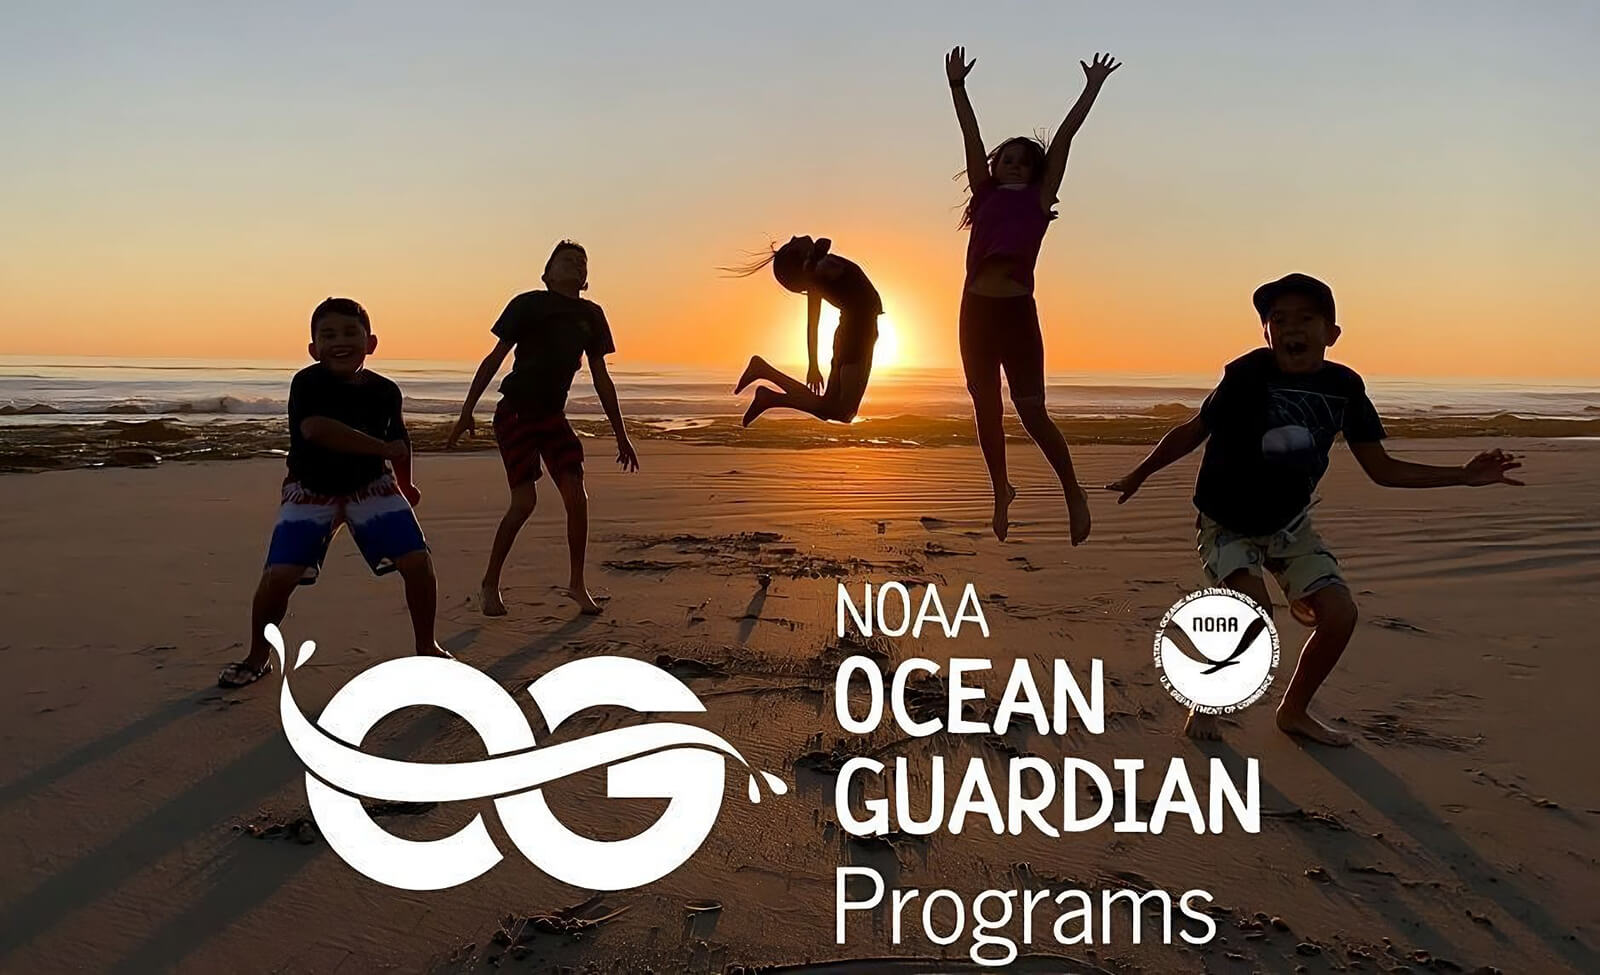 Ocean Guardian Programs